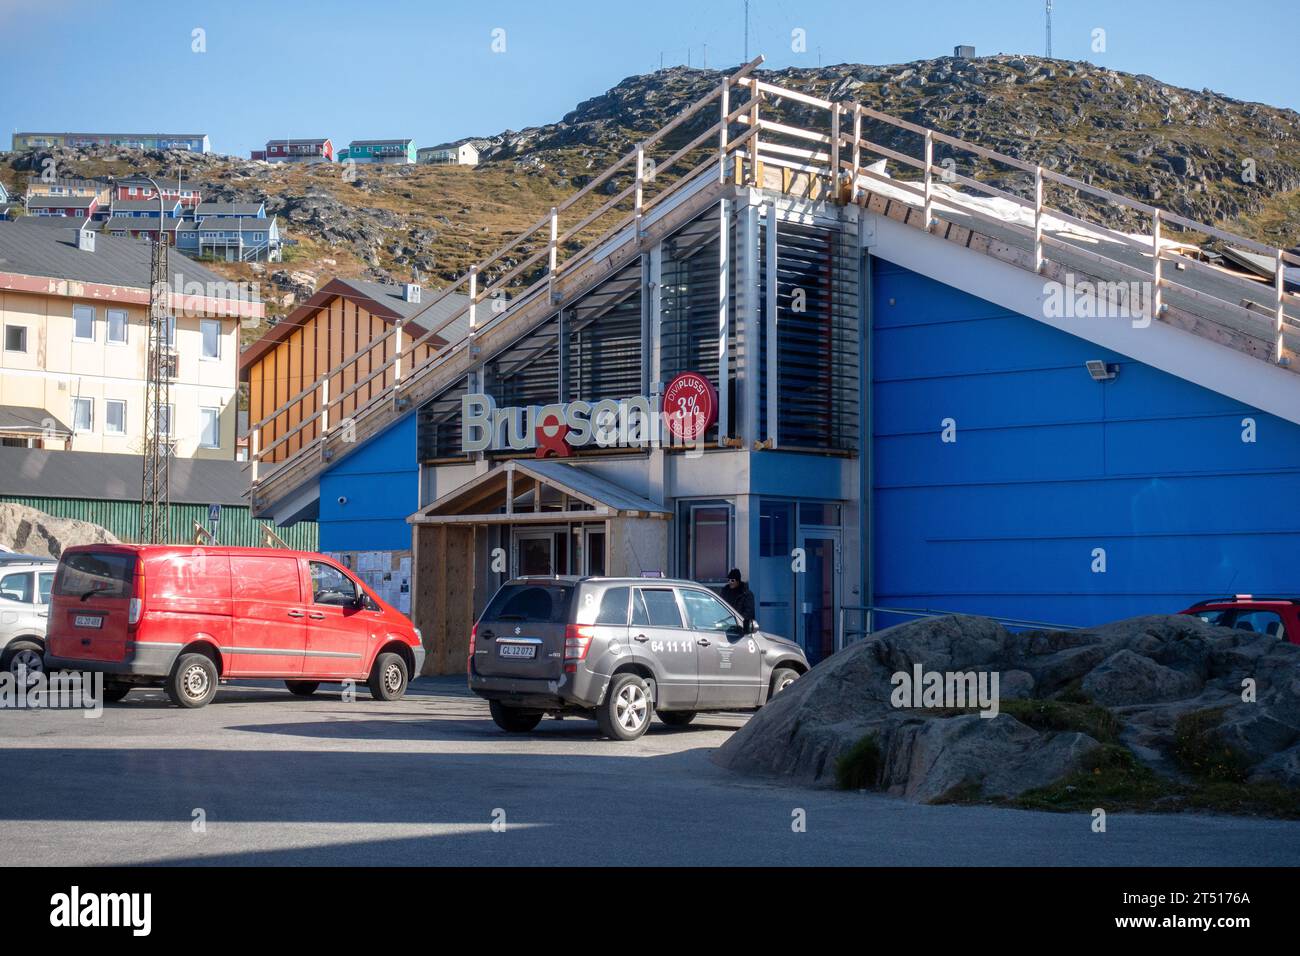 Brugseni is a Greenlandic Supermarket Chain In Qaqortoq Greenland, Store Entrance Building Exterior Stock Photo